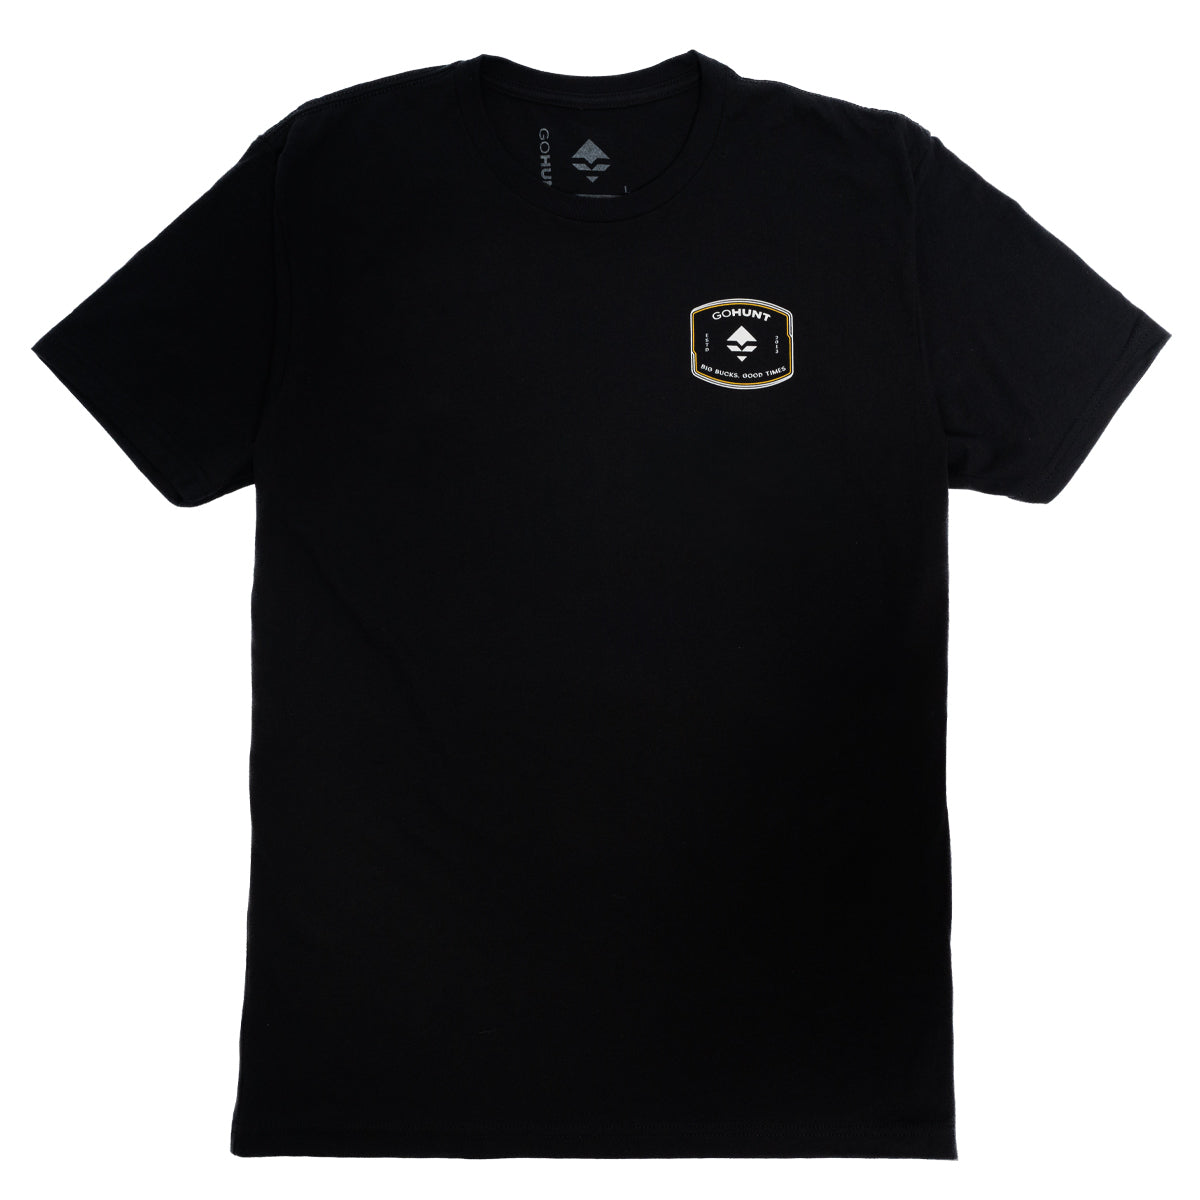 GOHUNT Origin T-Shirt in  by GOHUNT | GOHUNT - GOHUNT Shop